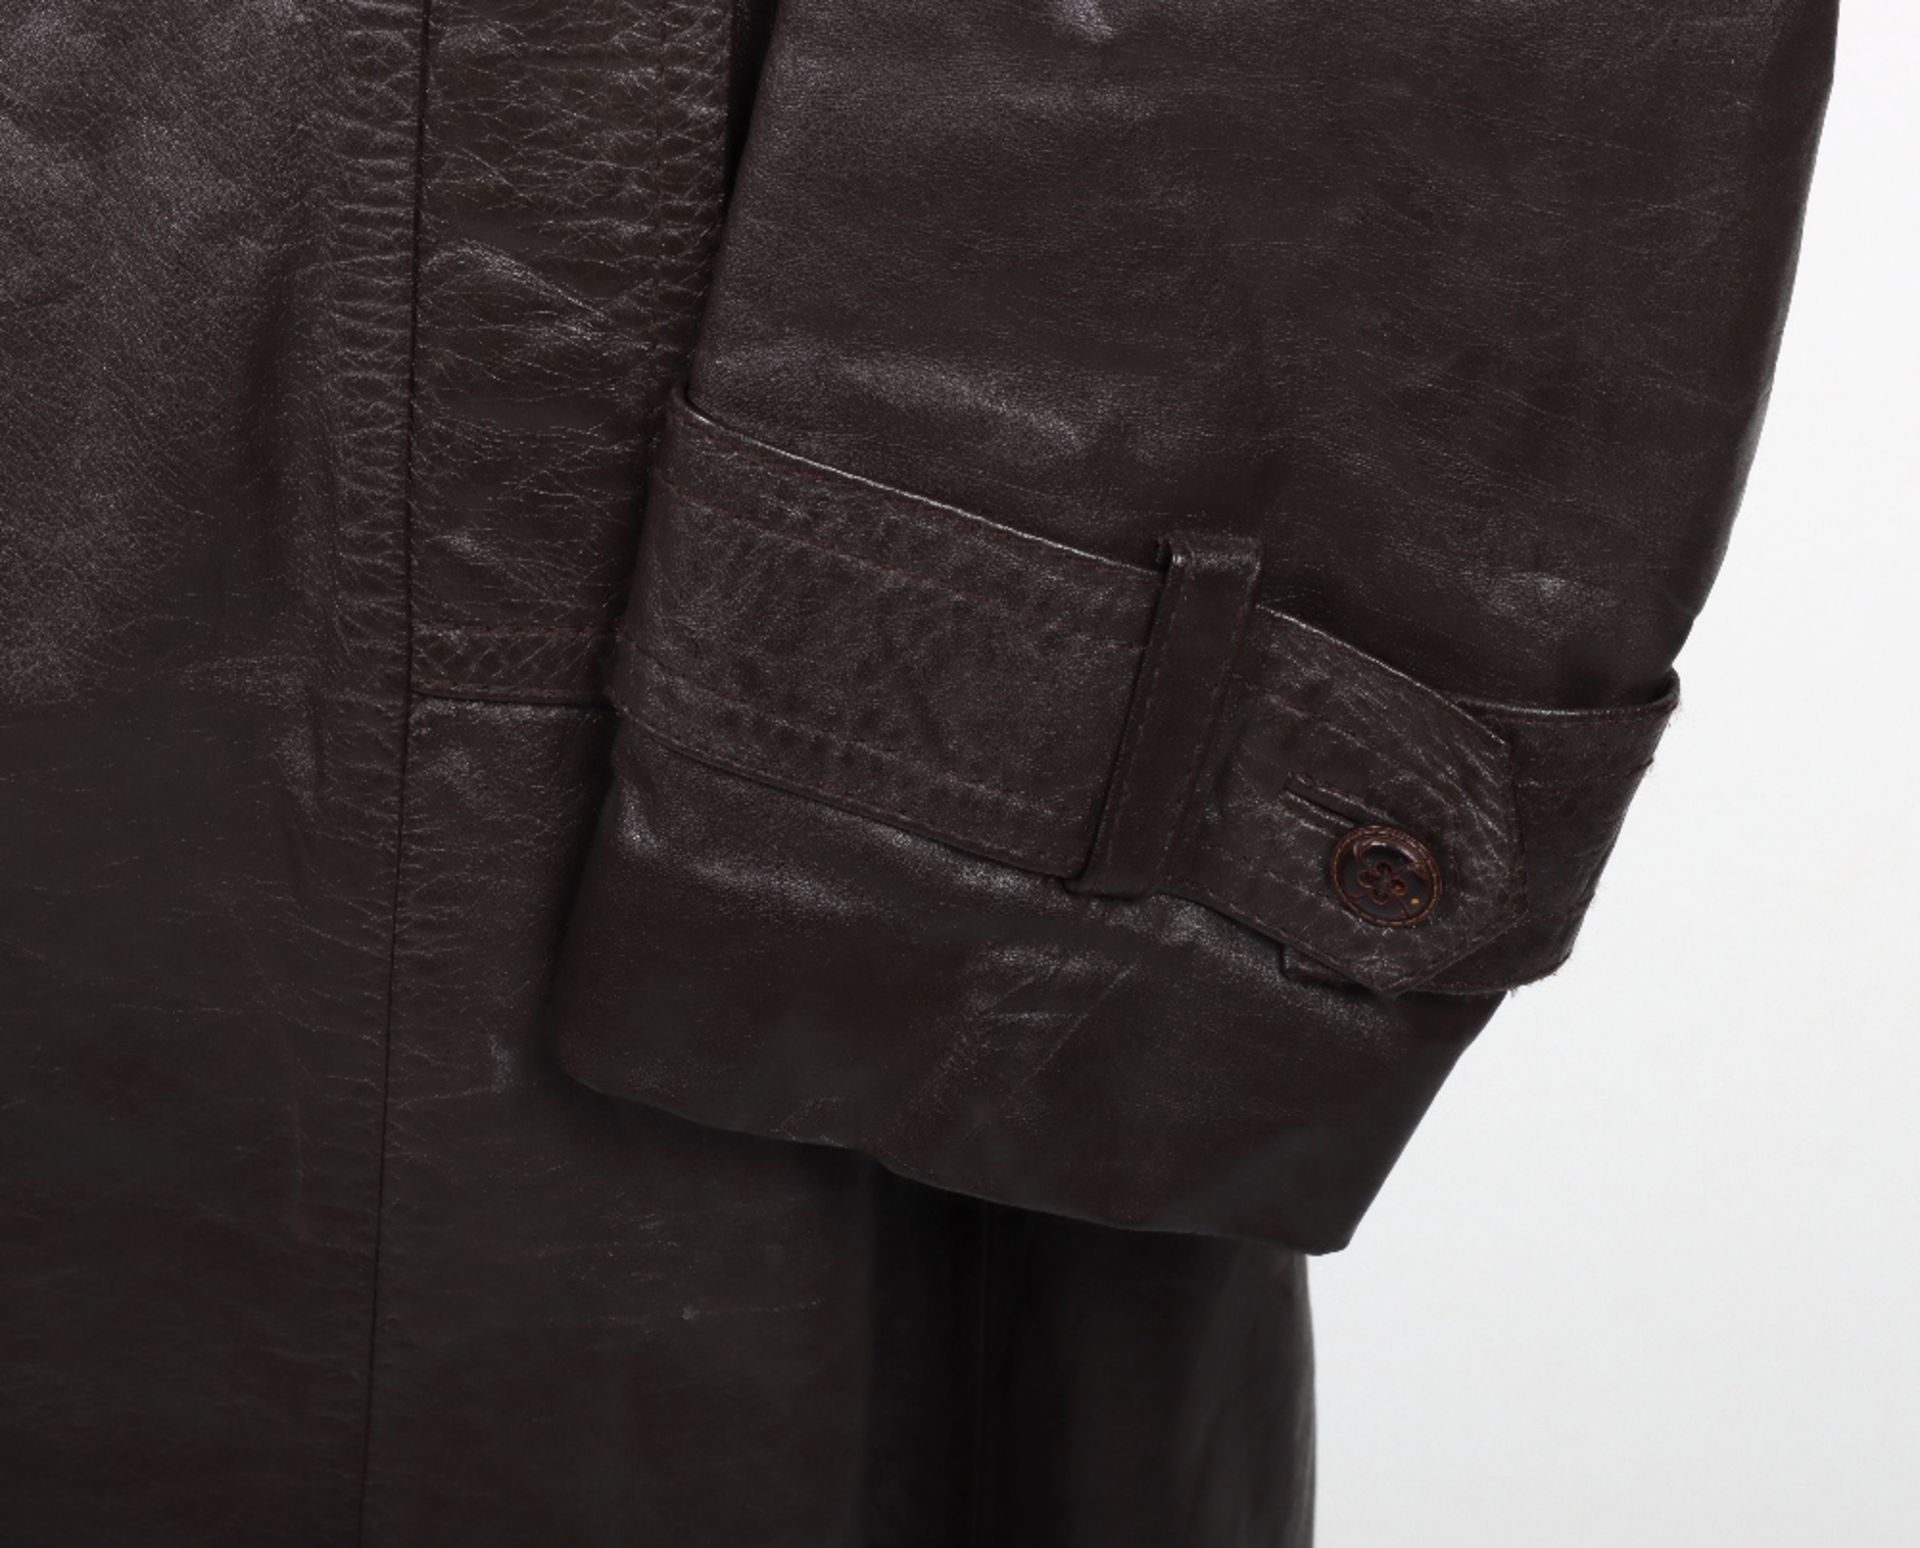 Vintage Style German Leather Coat - Image 6 of 9